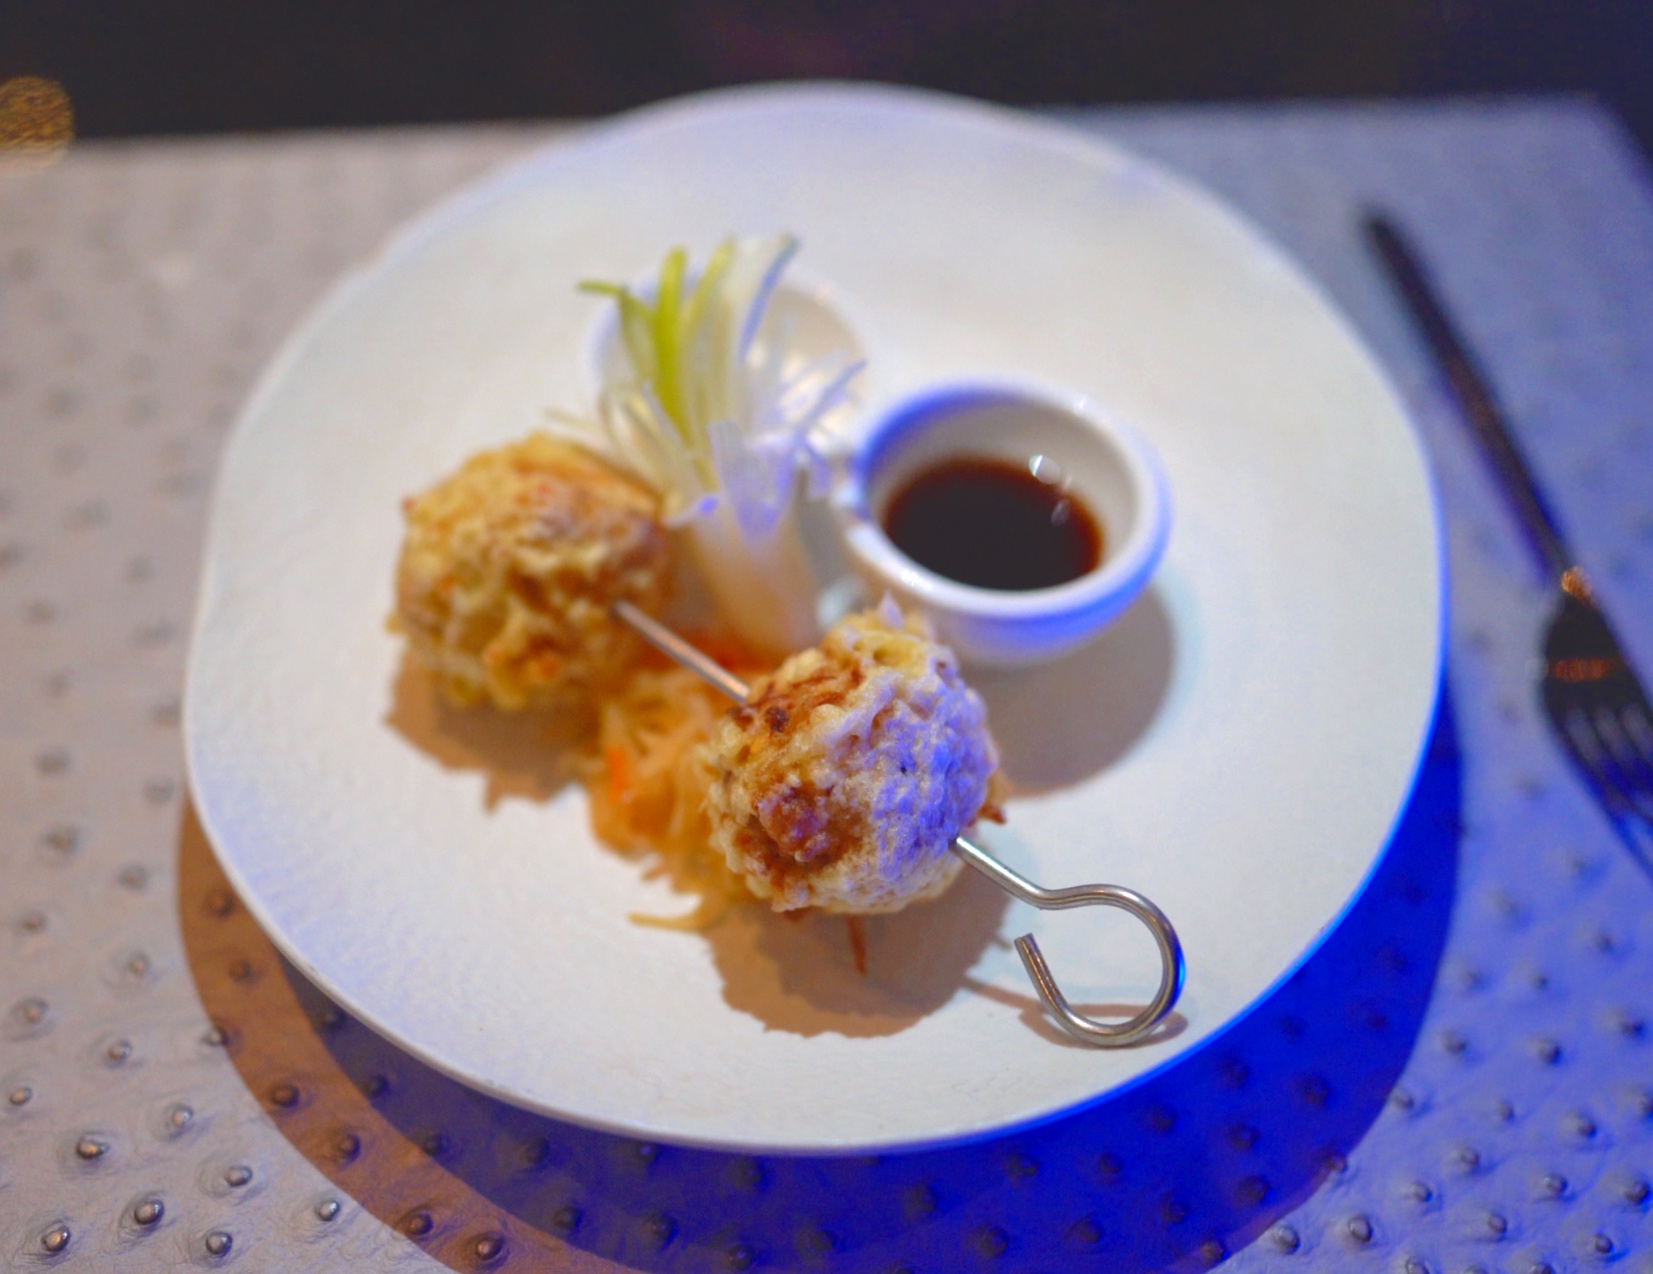  King crab tempura.  